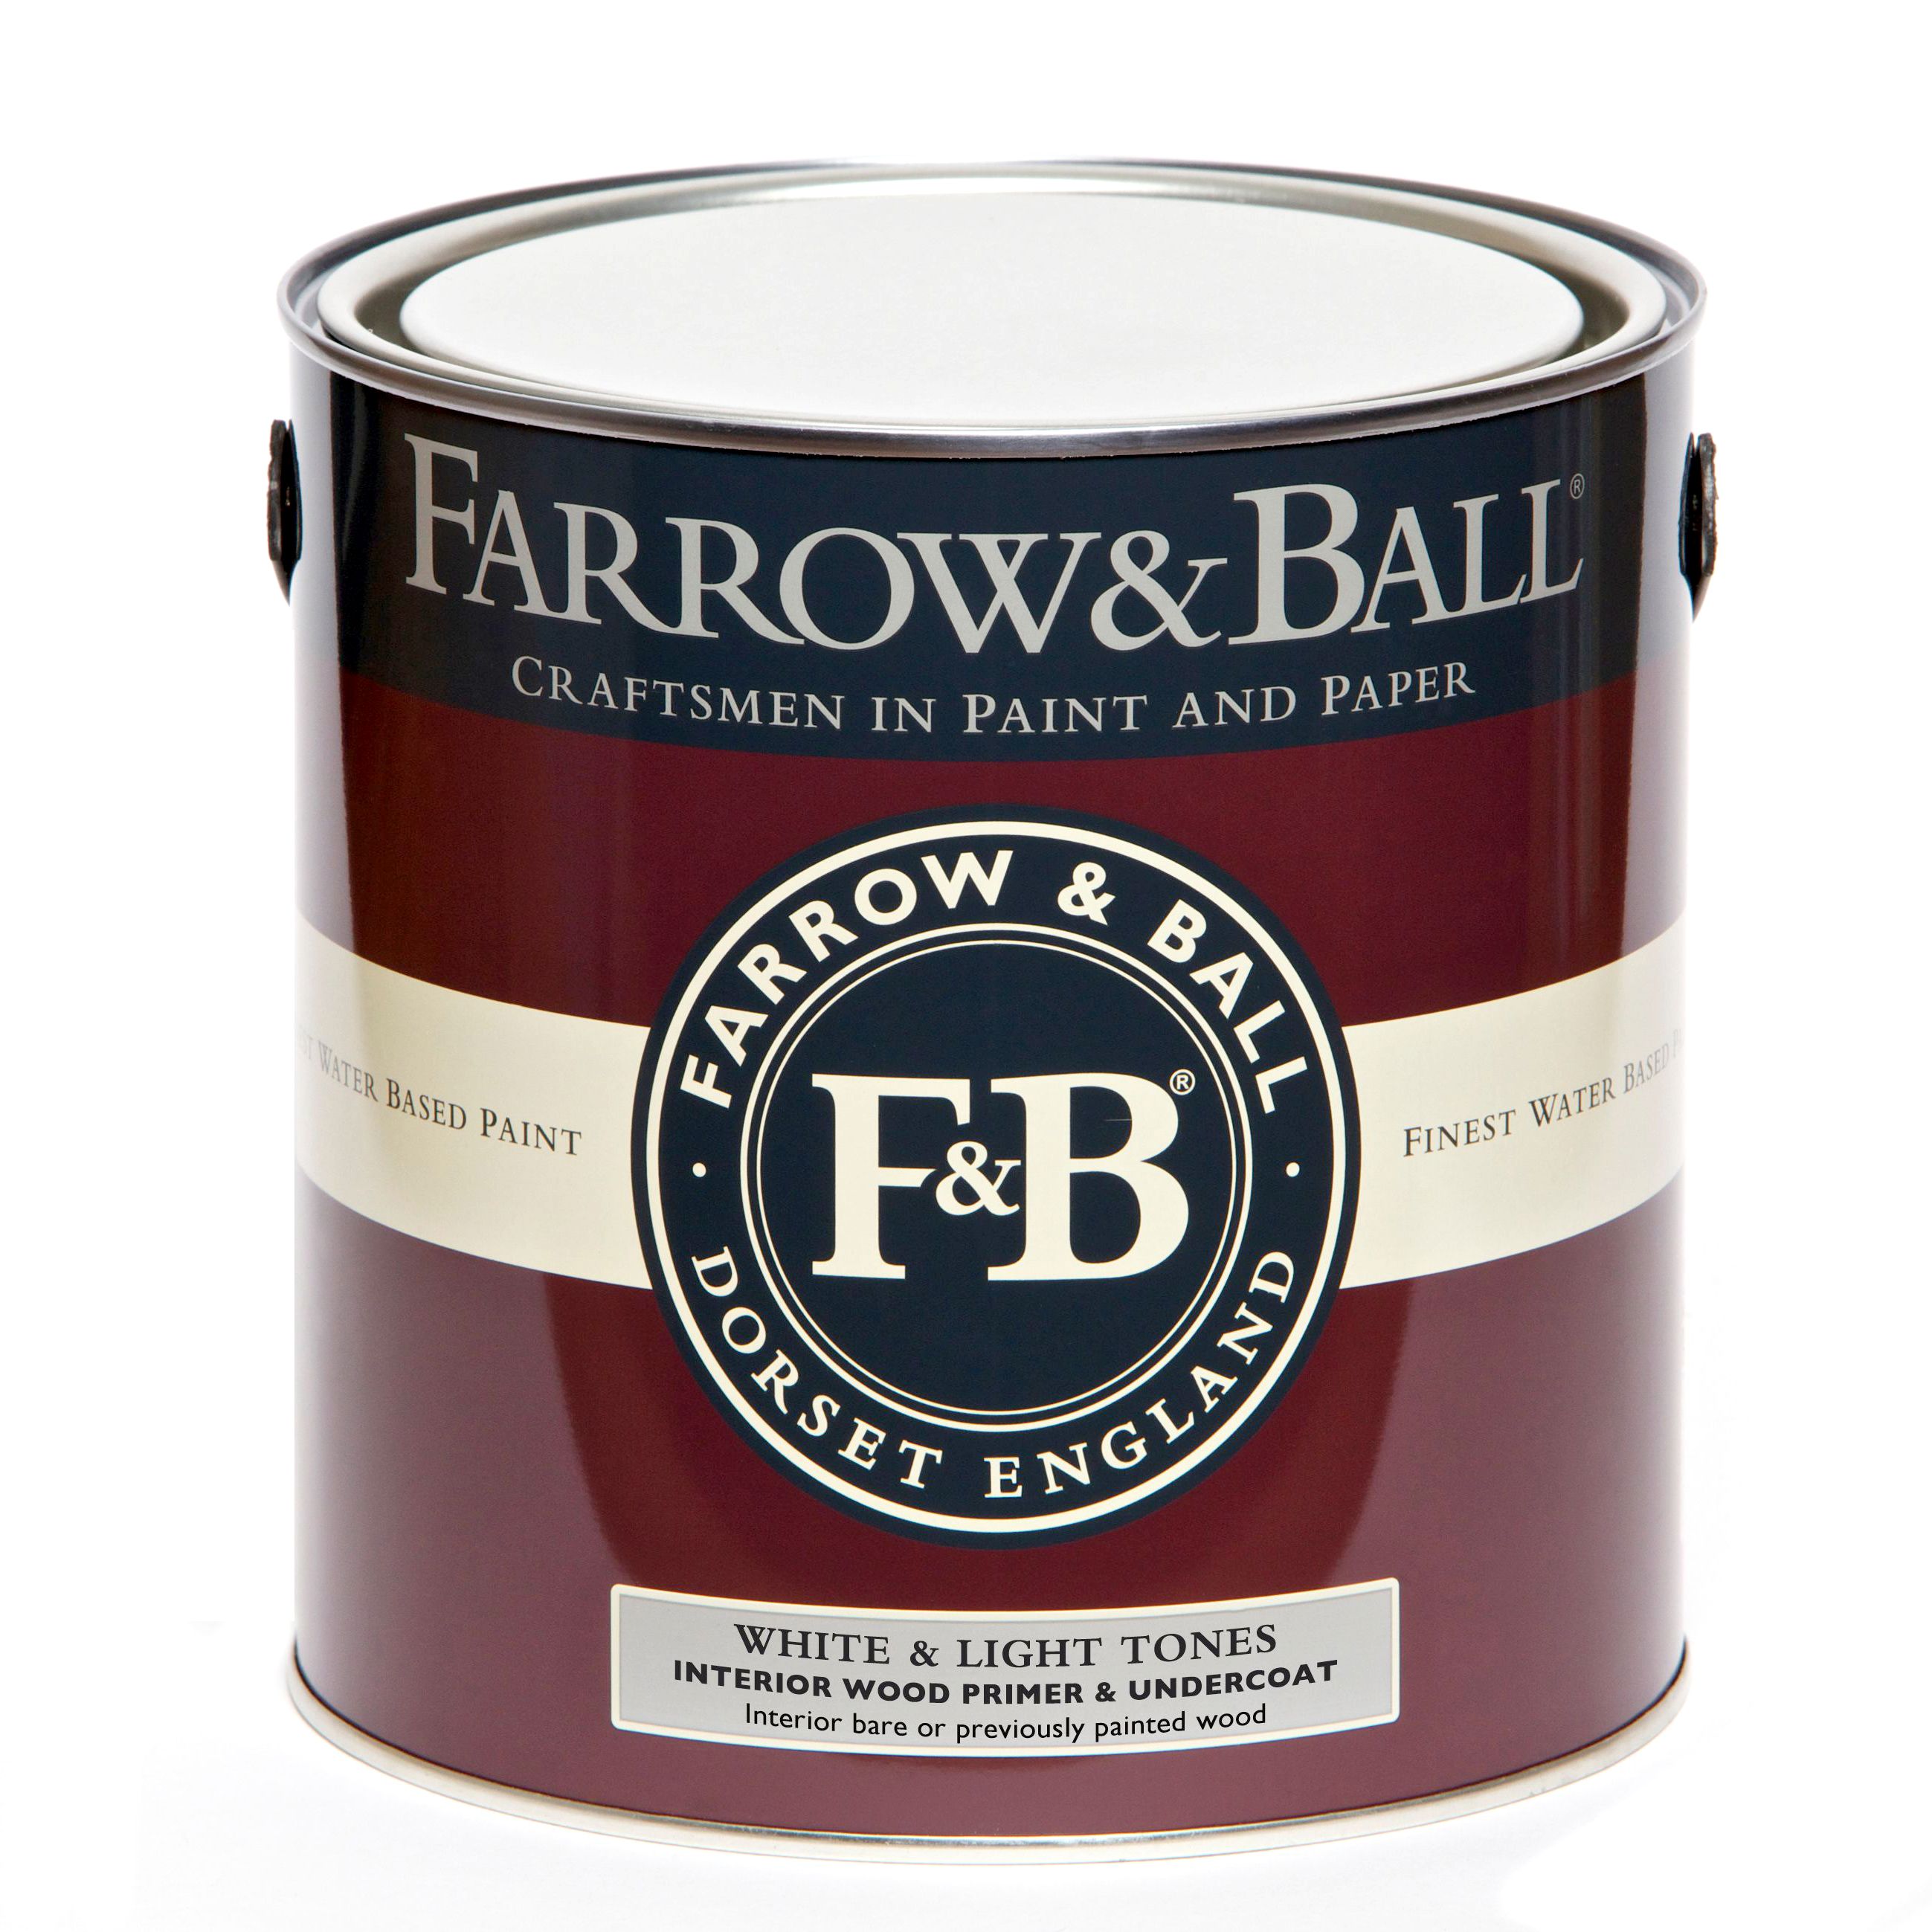 Farrow & Ball White & Light Tones Wood Primer & undercoat, 2.5L